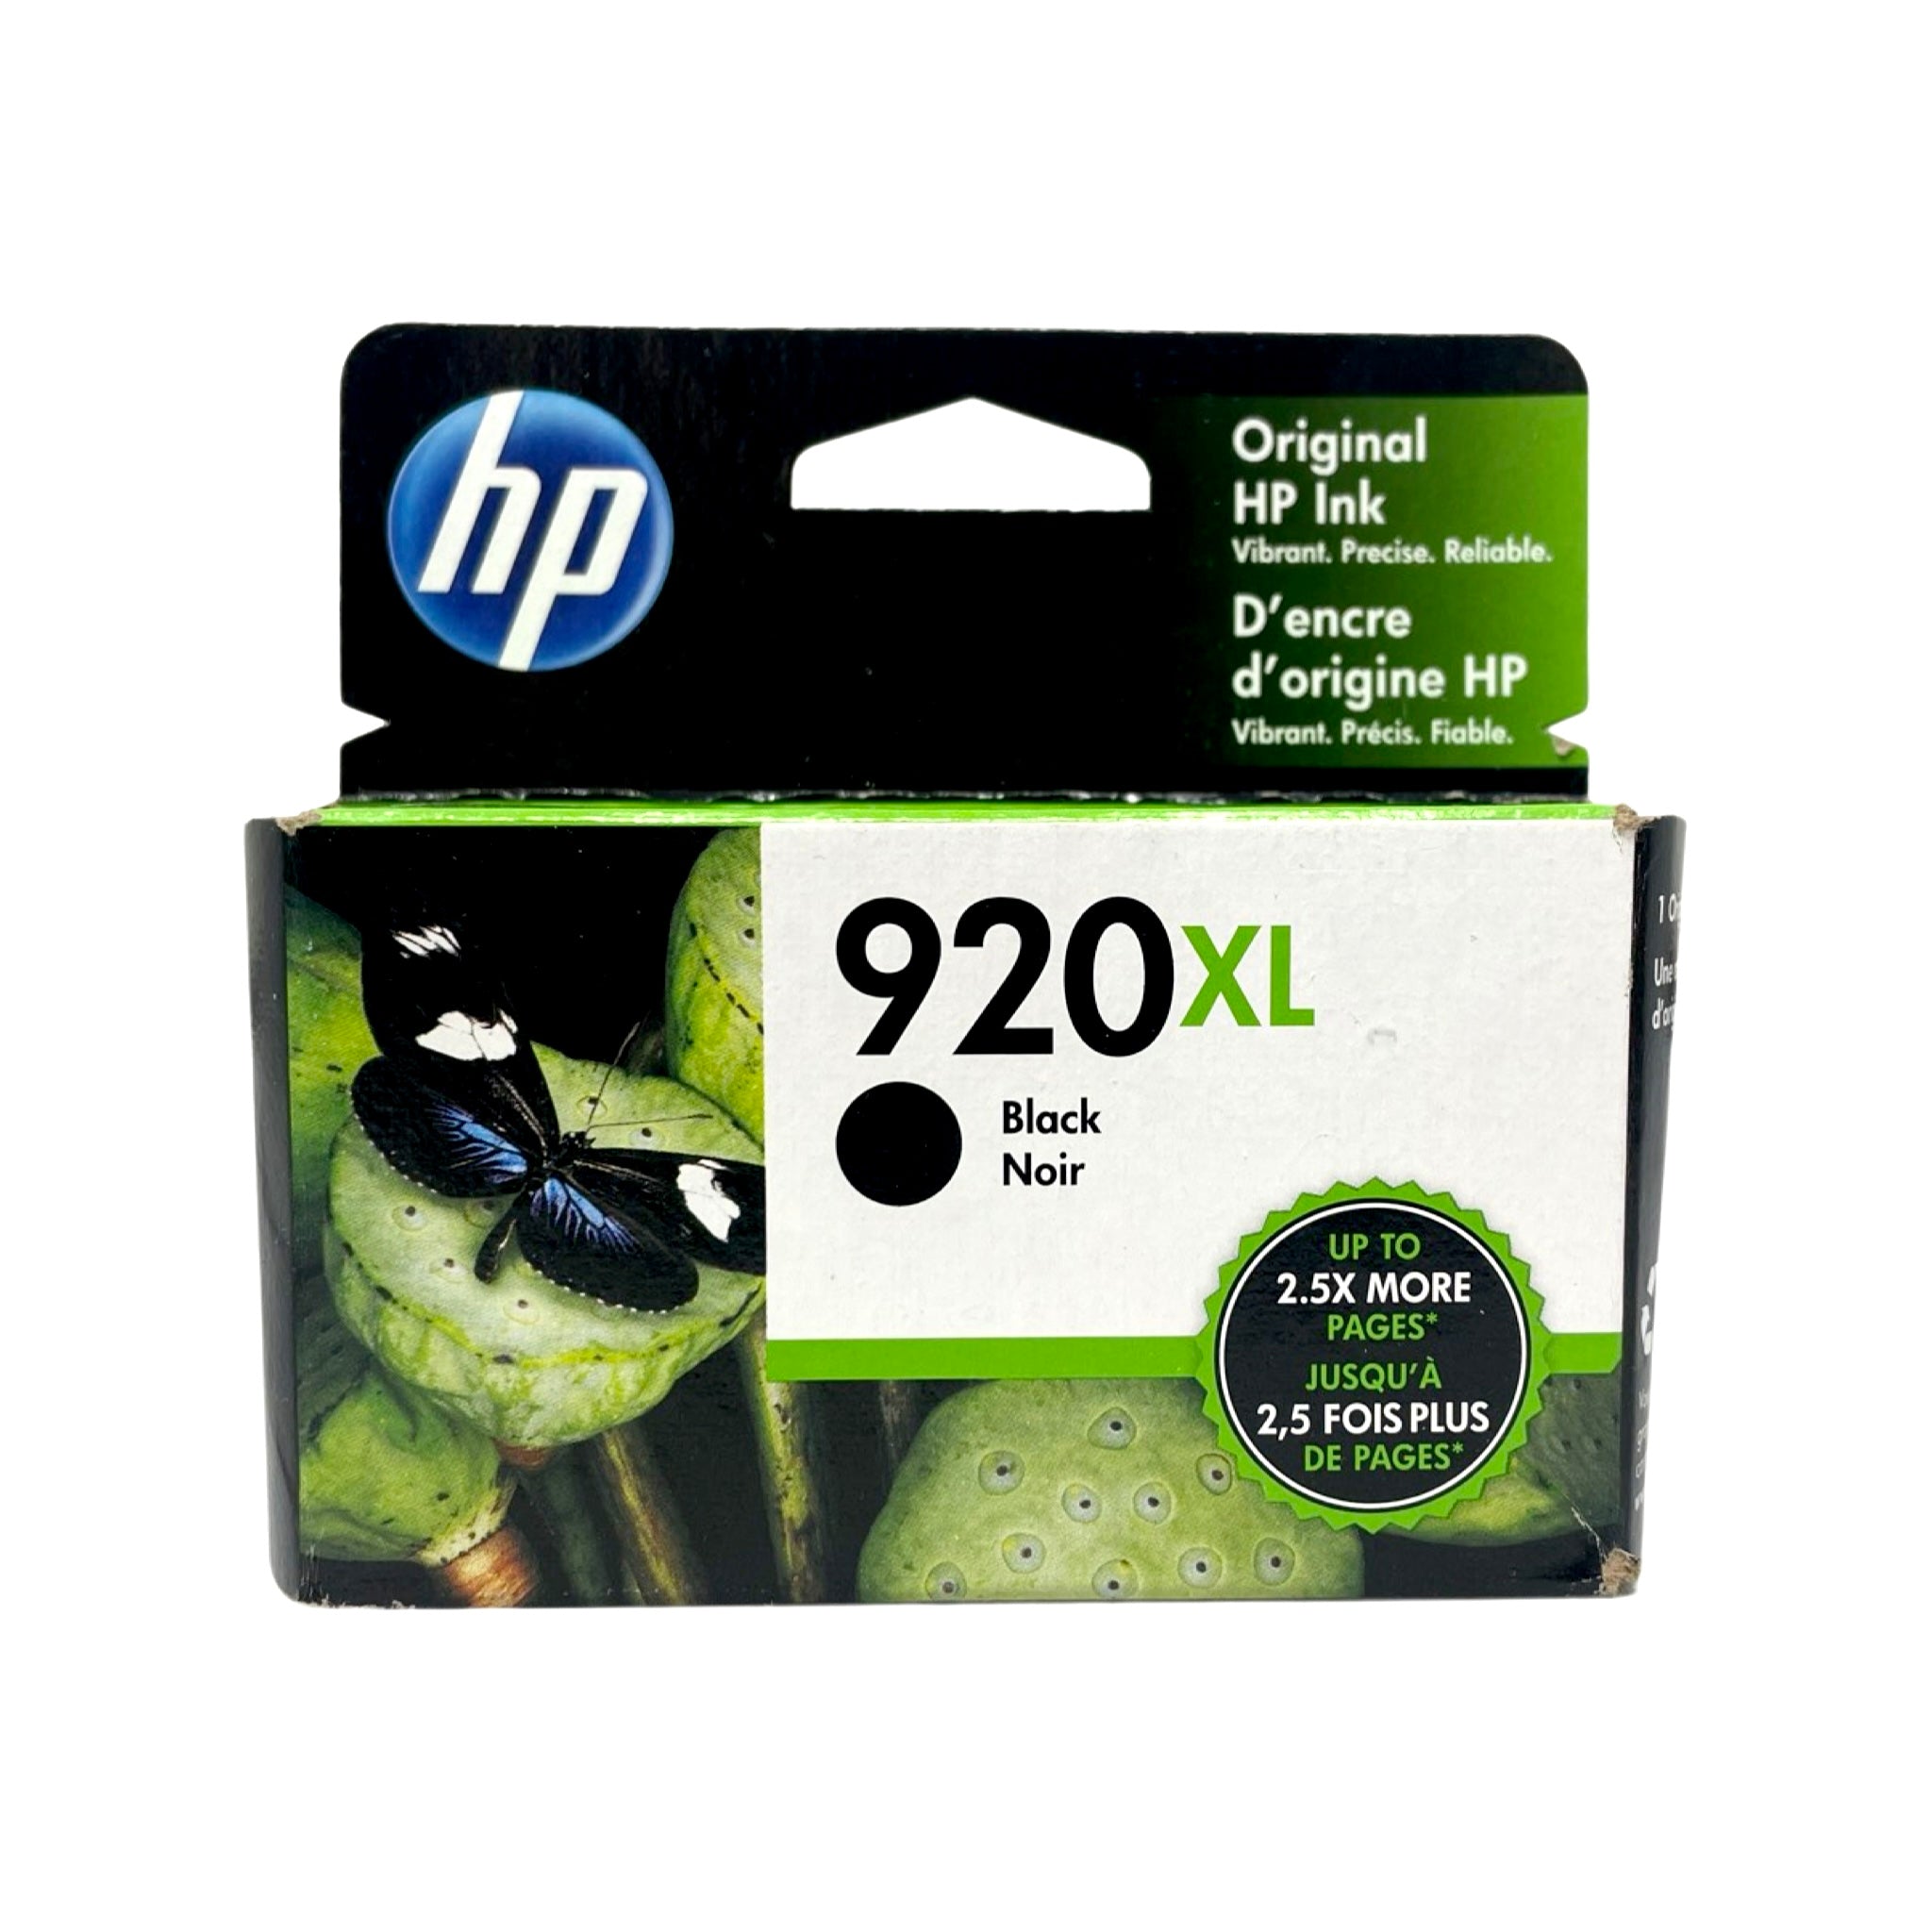 Genuine HP 920XL Black High-Yield Ink Cartridge